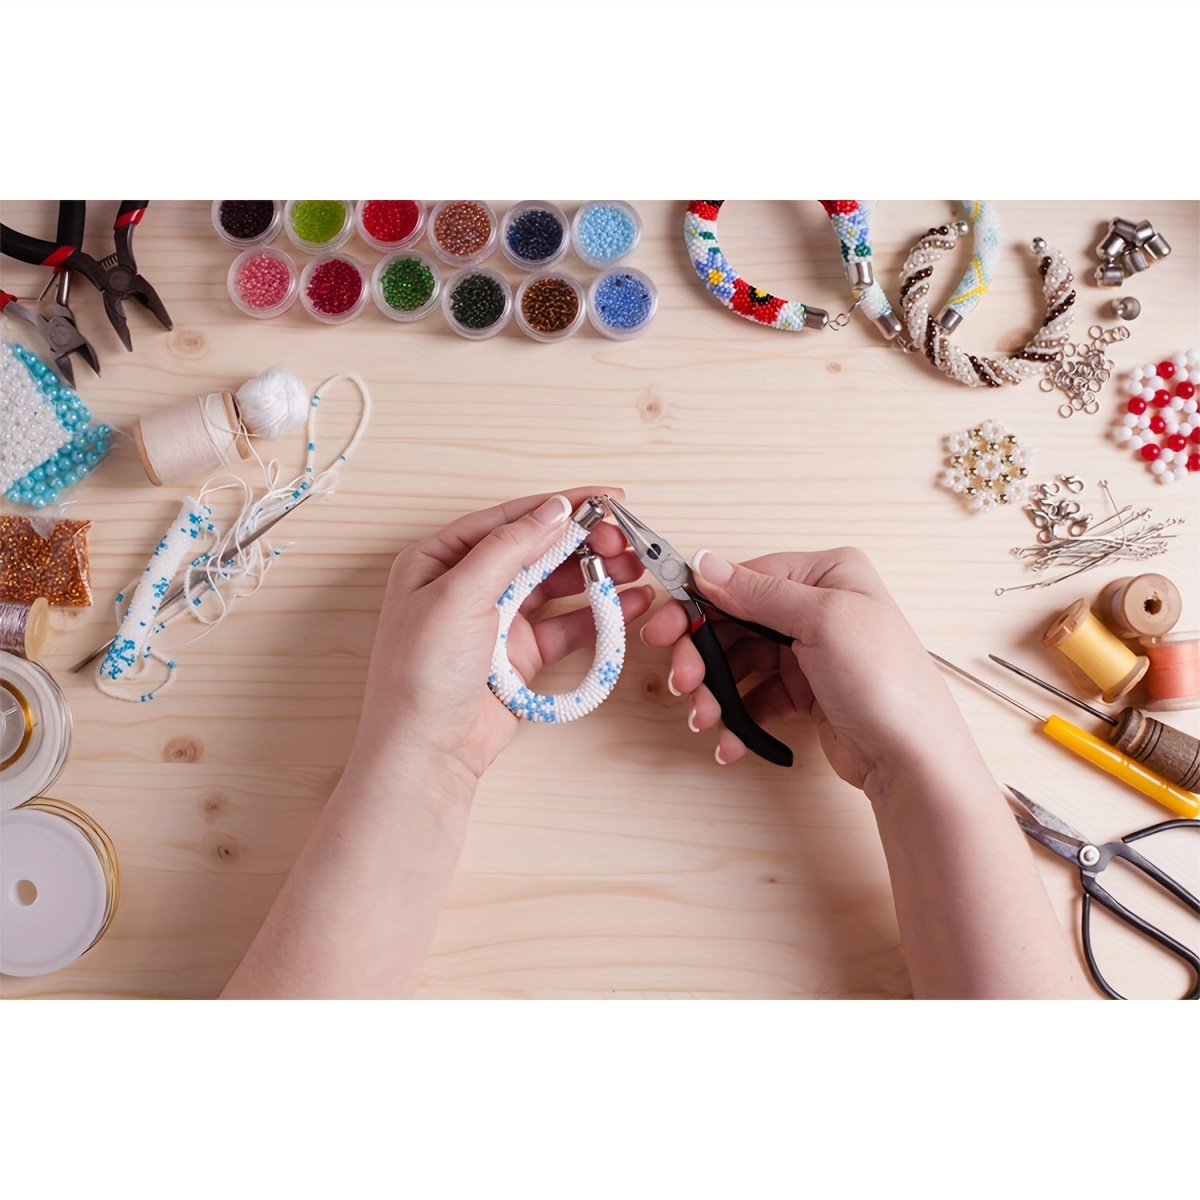 Jewelry Findings Tool, Bracelet Making Kit, Craft Beads